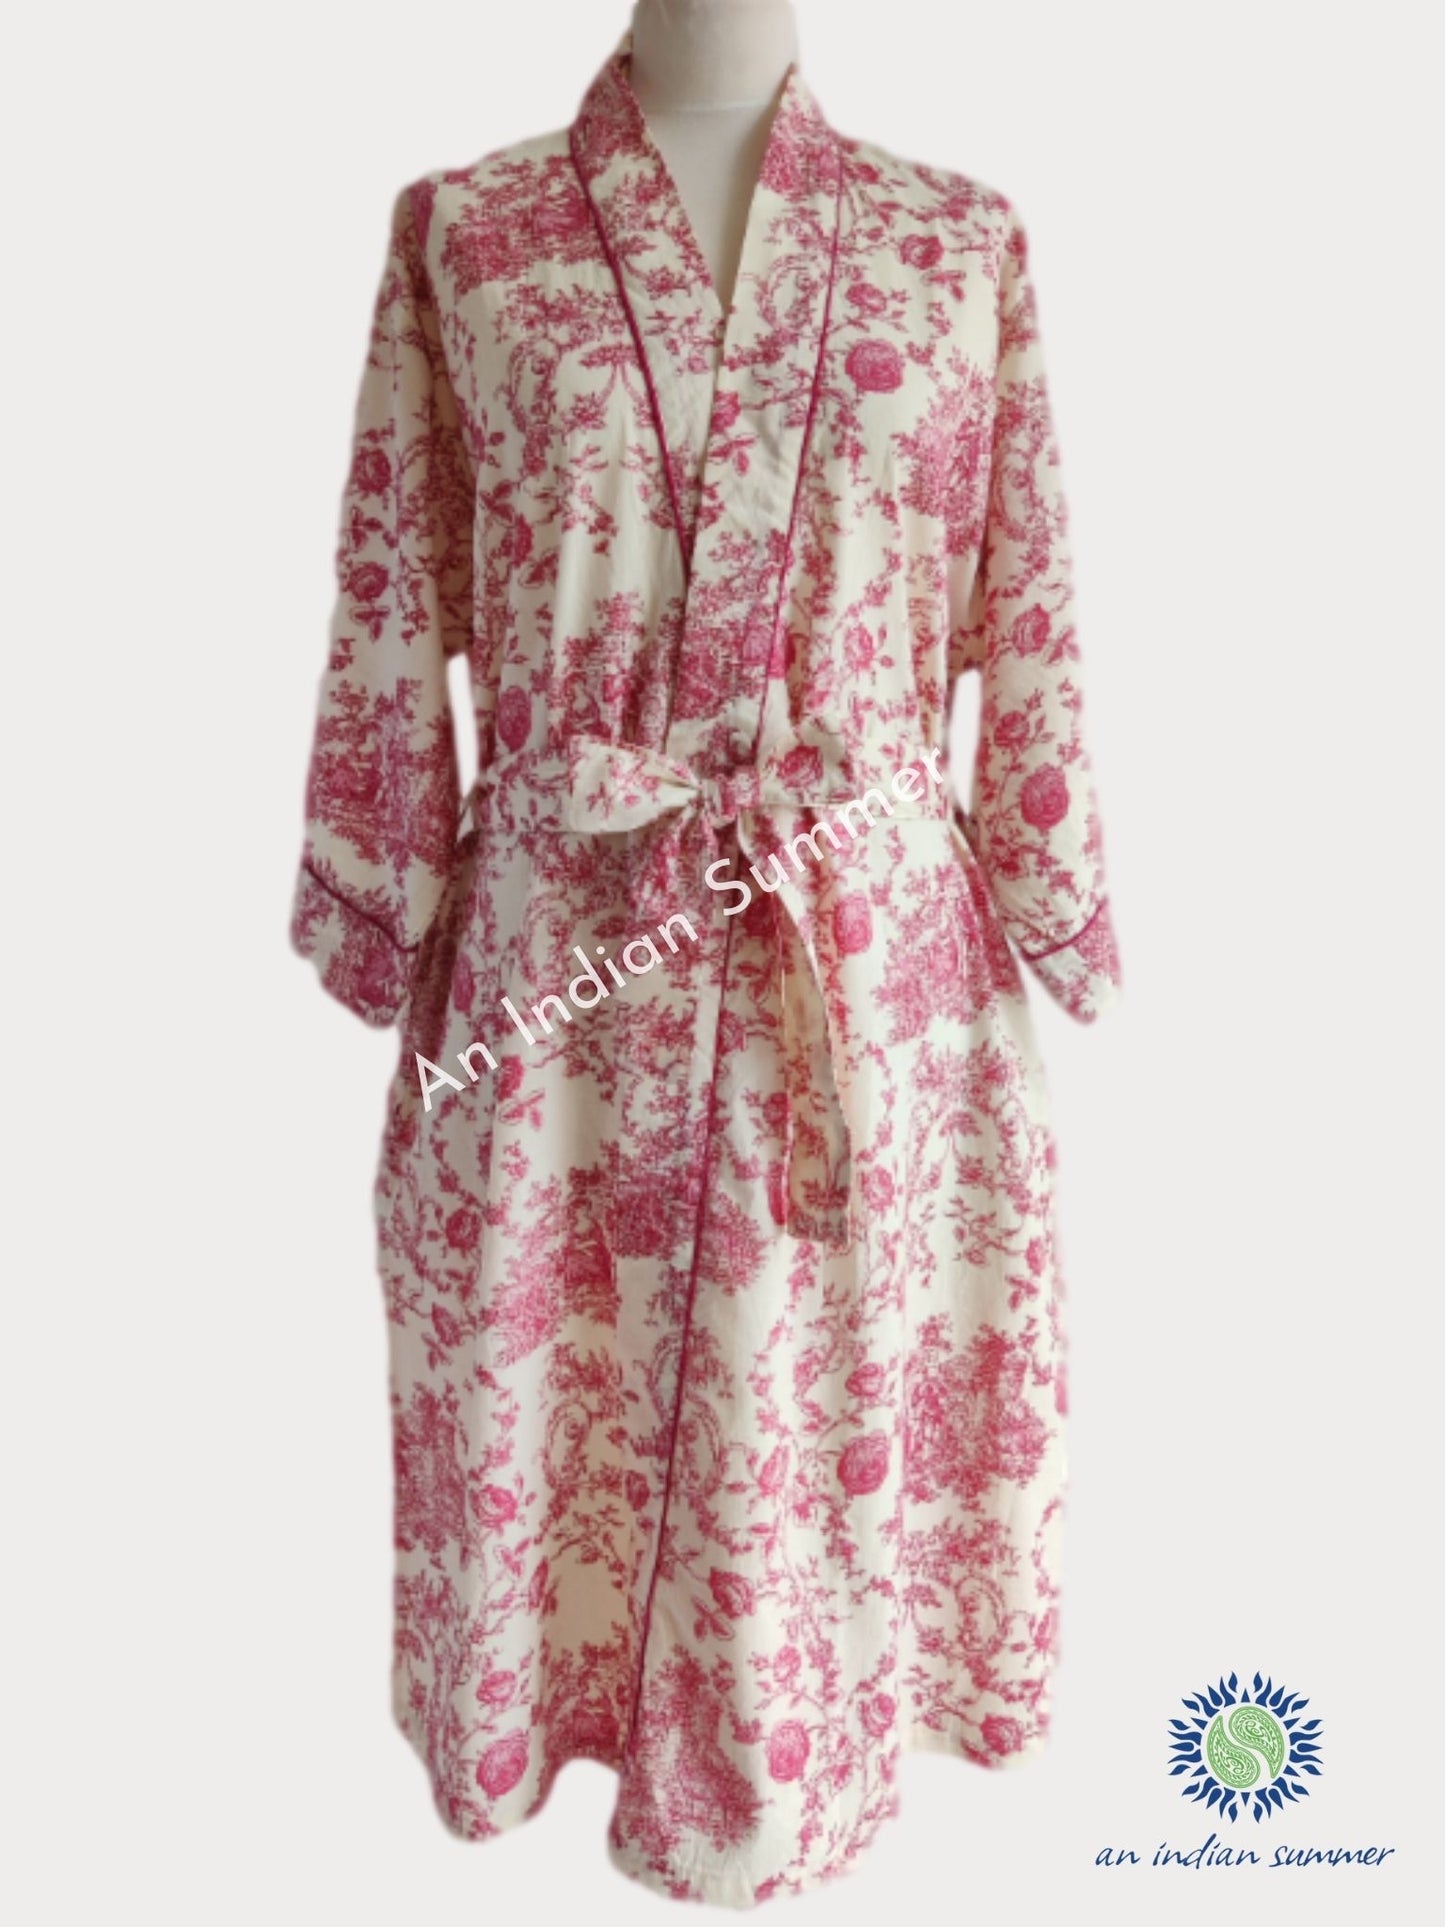 Toile De Jouy | Kimono Robe | Berry Red | Premium Quality Poplin Cotton | An Indian Summer | Seasonless Timeless Sustainable Ethical Authentic Artisan Conscious Clothing Lifestyle Brand